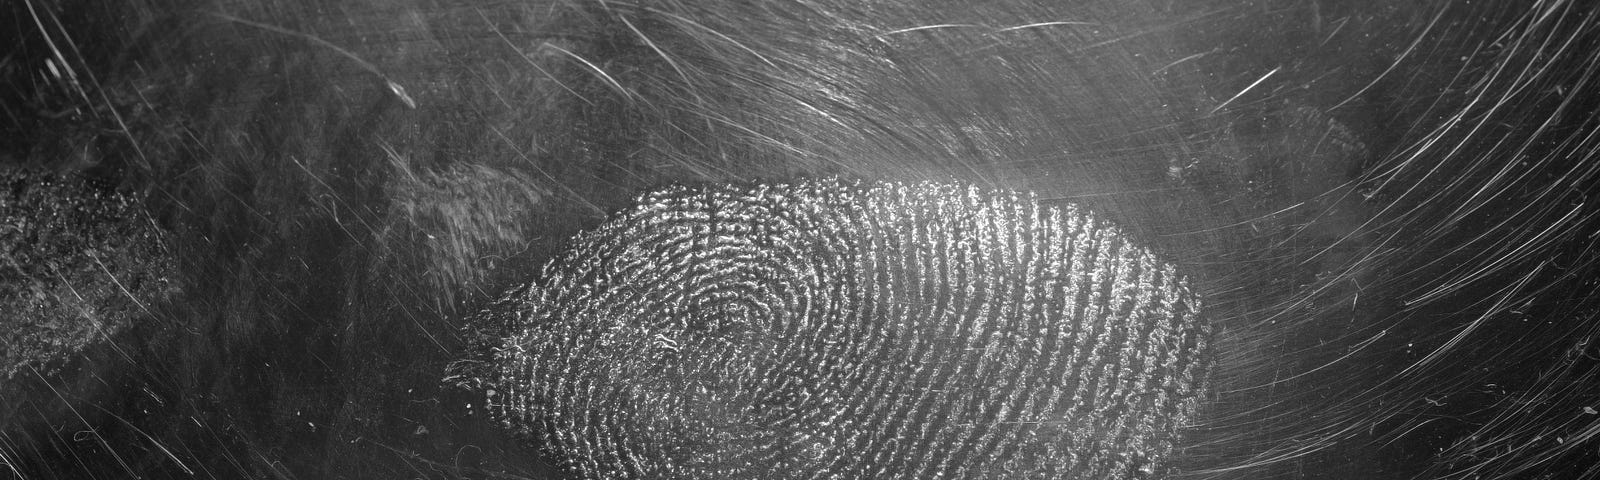 Fingerprint on an aged surface.